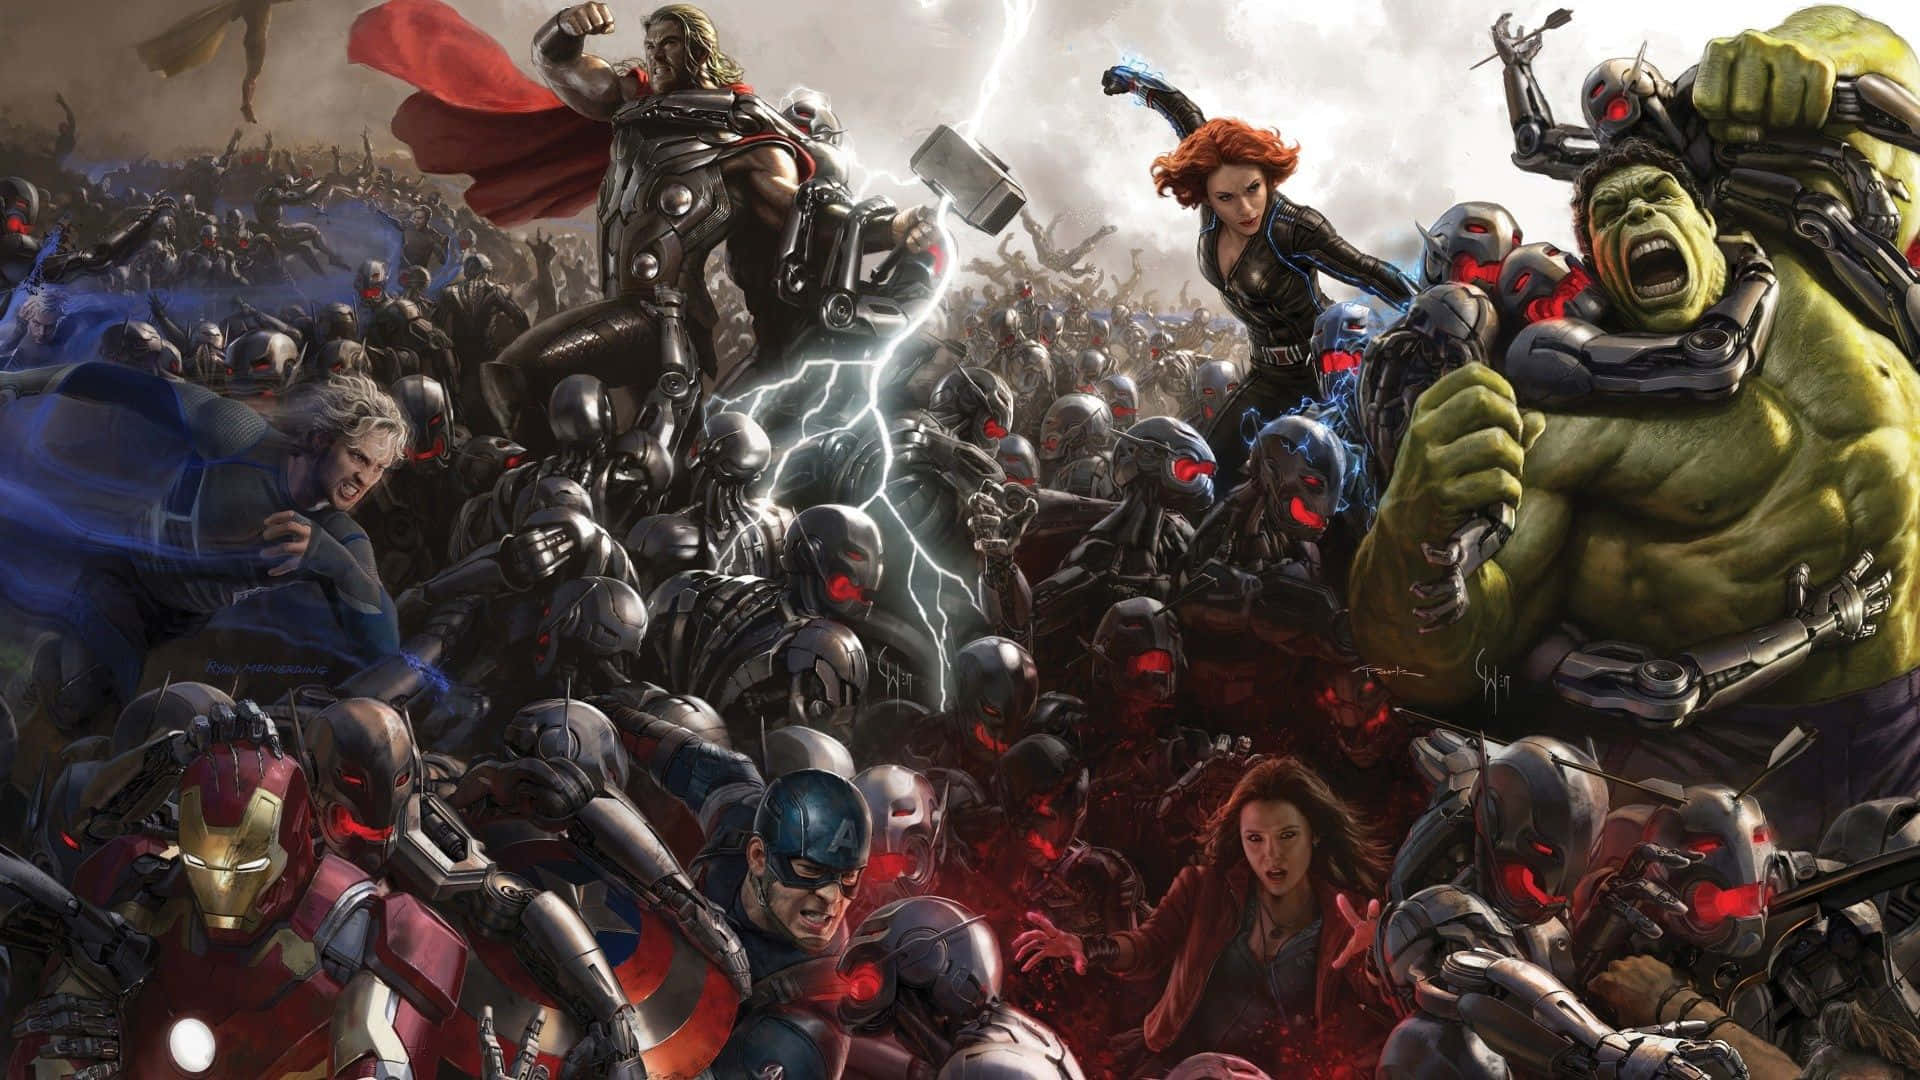 "MCU's Superhero Squad: Earth's Mightiest Heroes". Wallpaper